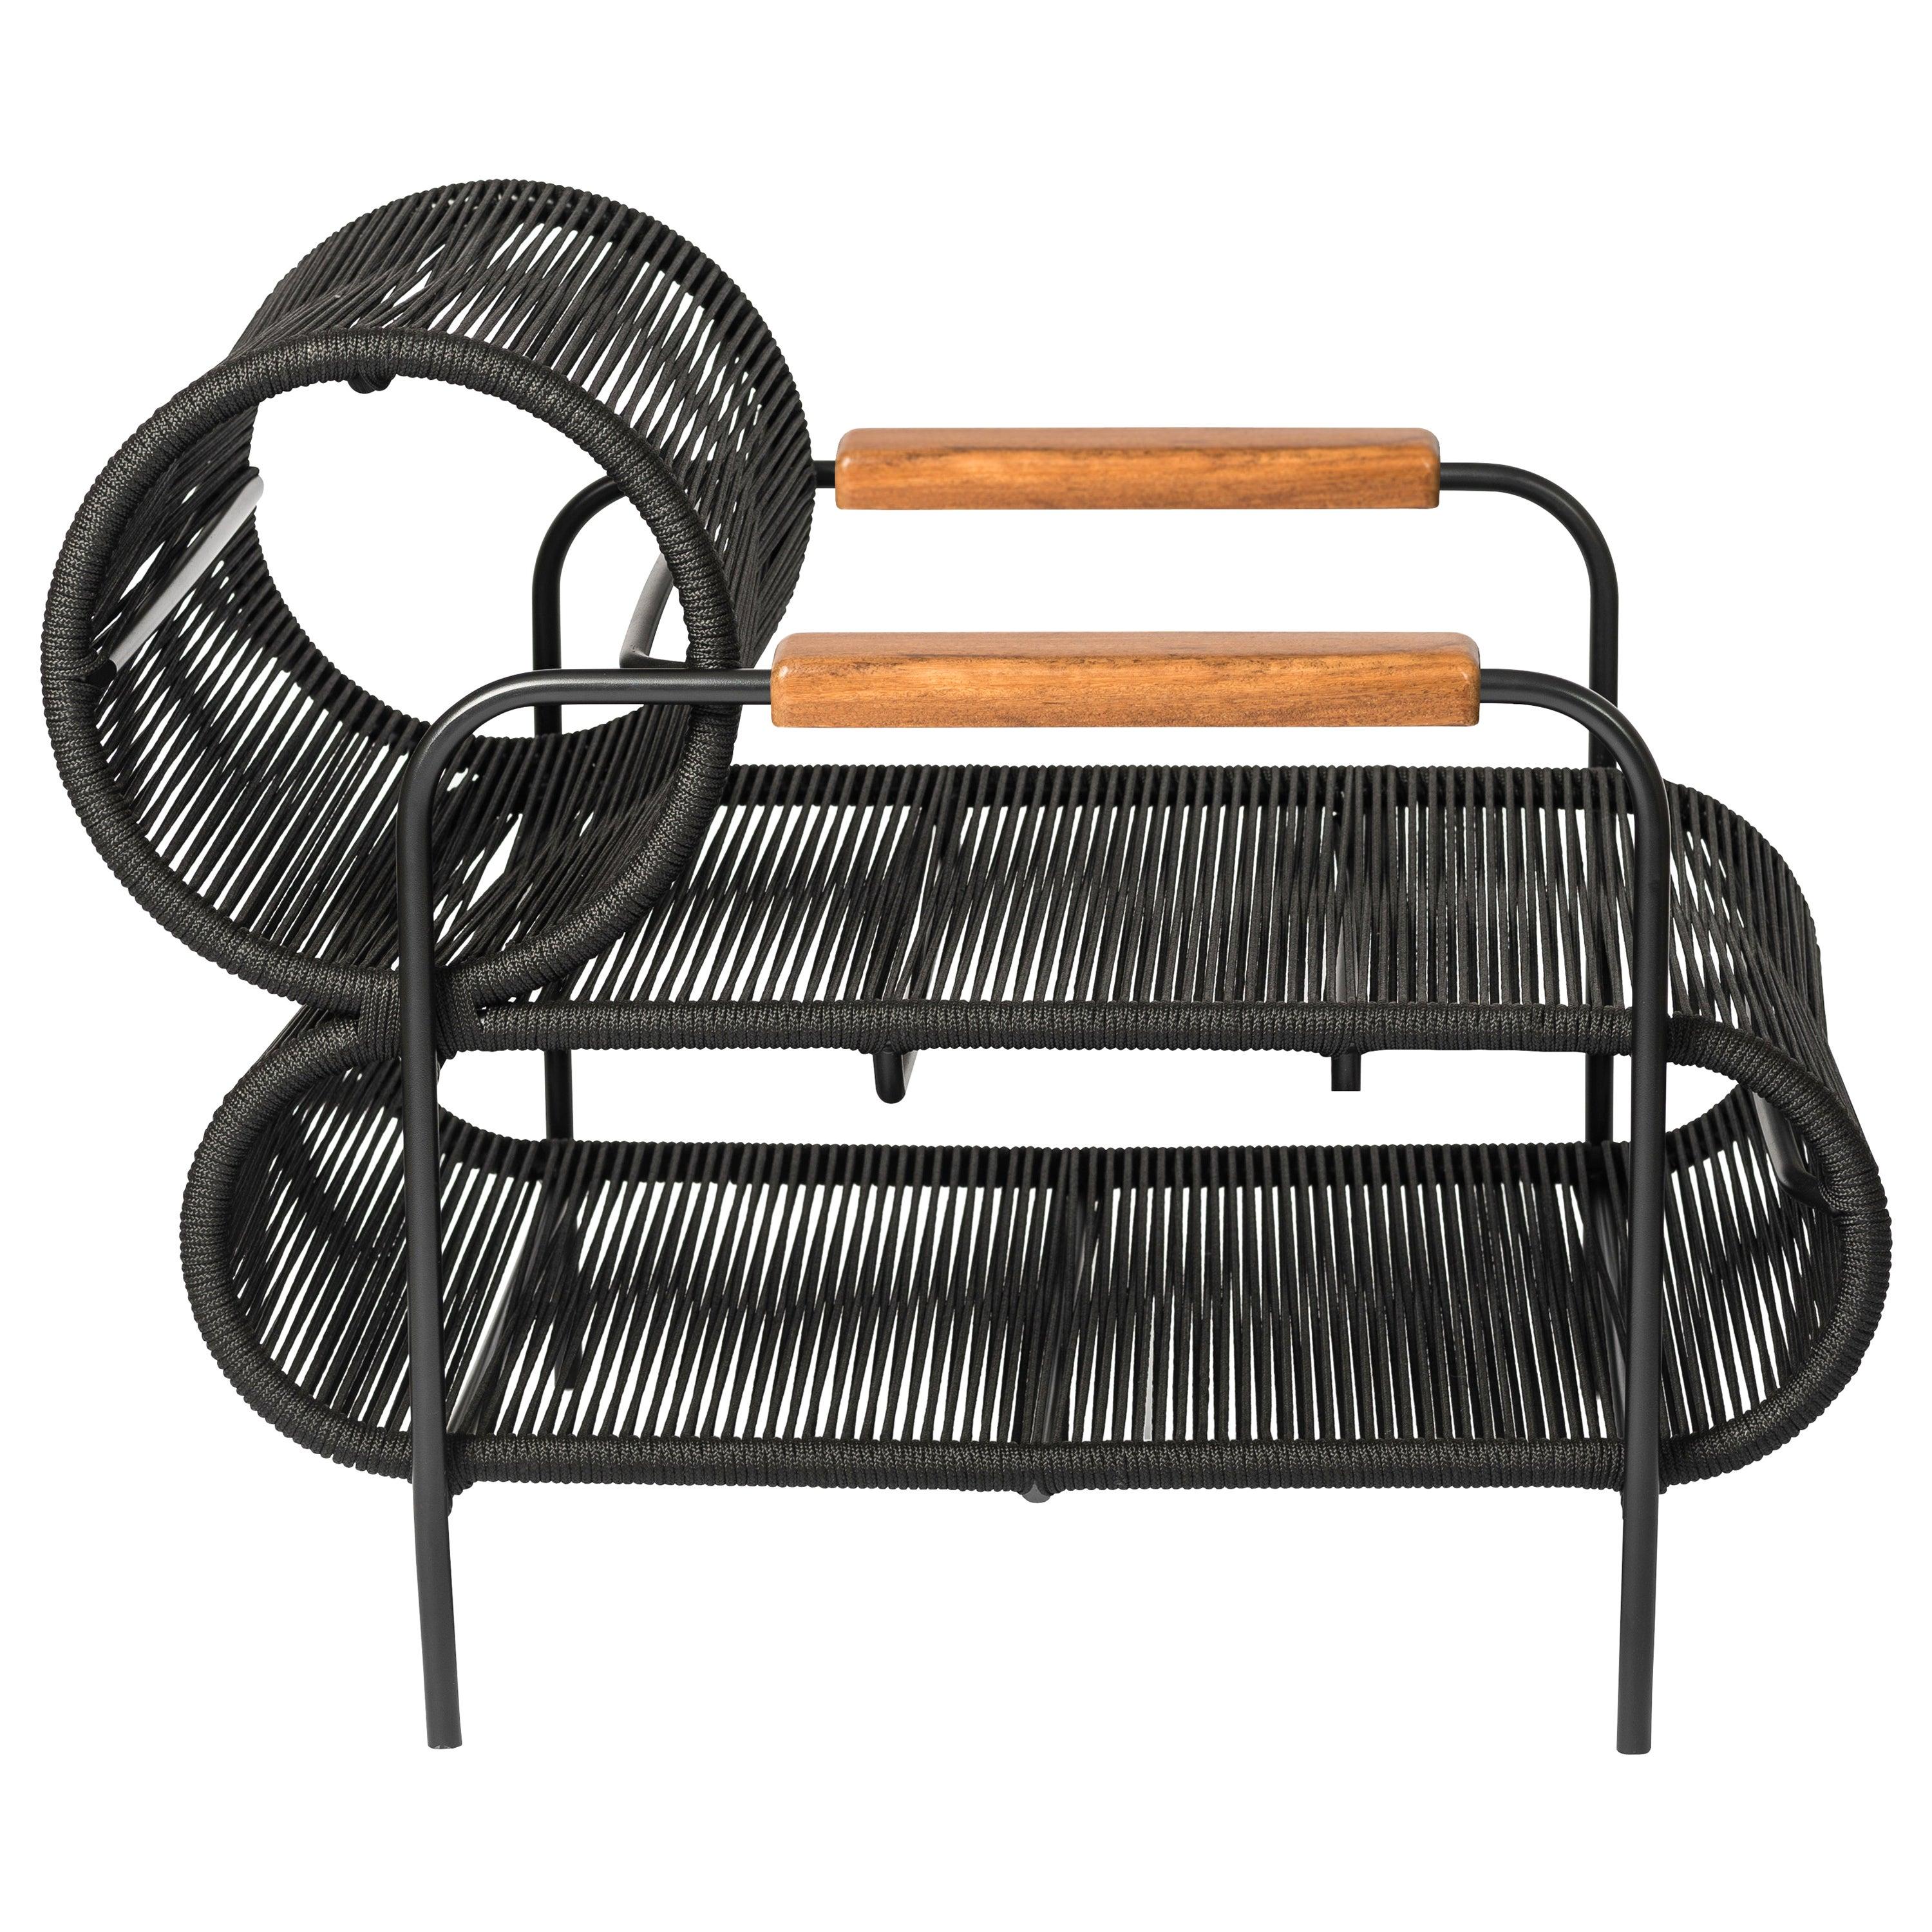 Fauteuil ELO Chaise longue In/Outdoor en métal, corde et Wood bras par Filipe Ramos en vente